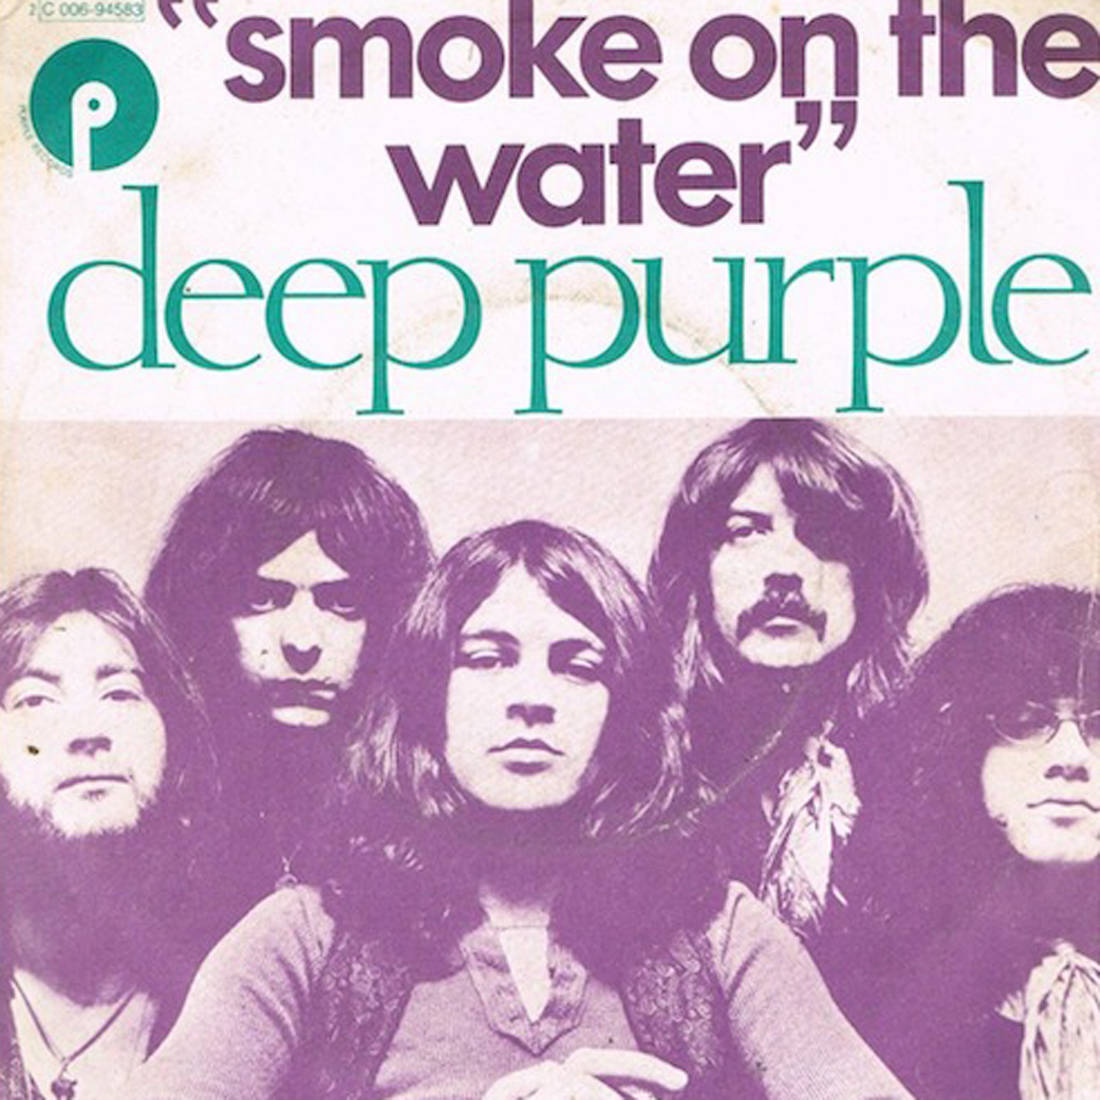 wkg 5 Deep Purple, Rolling Stones, Smoke on the water, SWITZERLAND, Casino